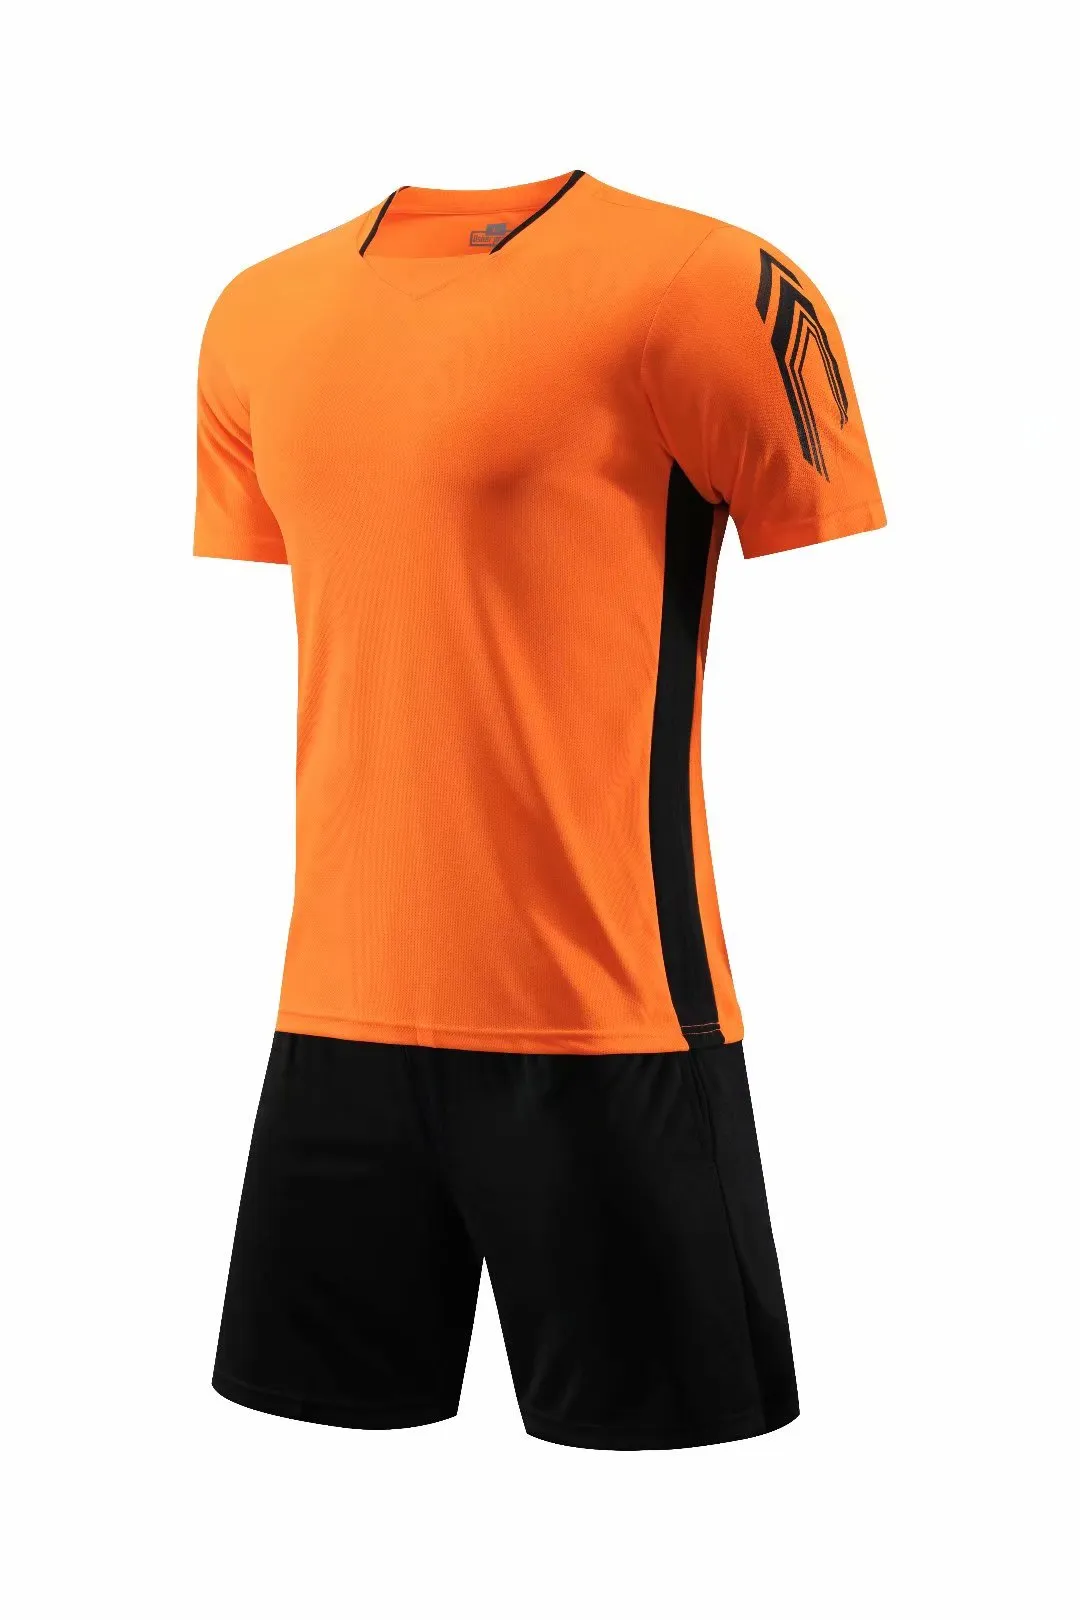 orange Children Kids Soccer Jersey Set Men Outdoors Football Kits uniforms Futbol Training Shirts Short Suit